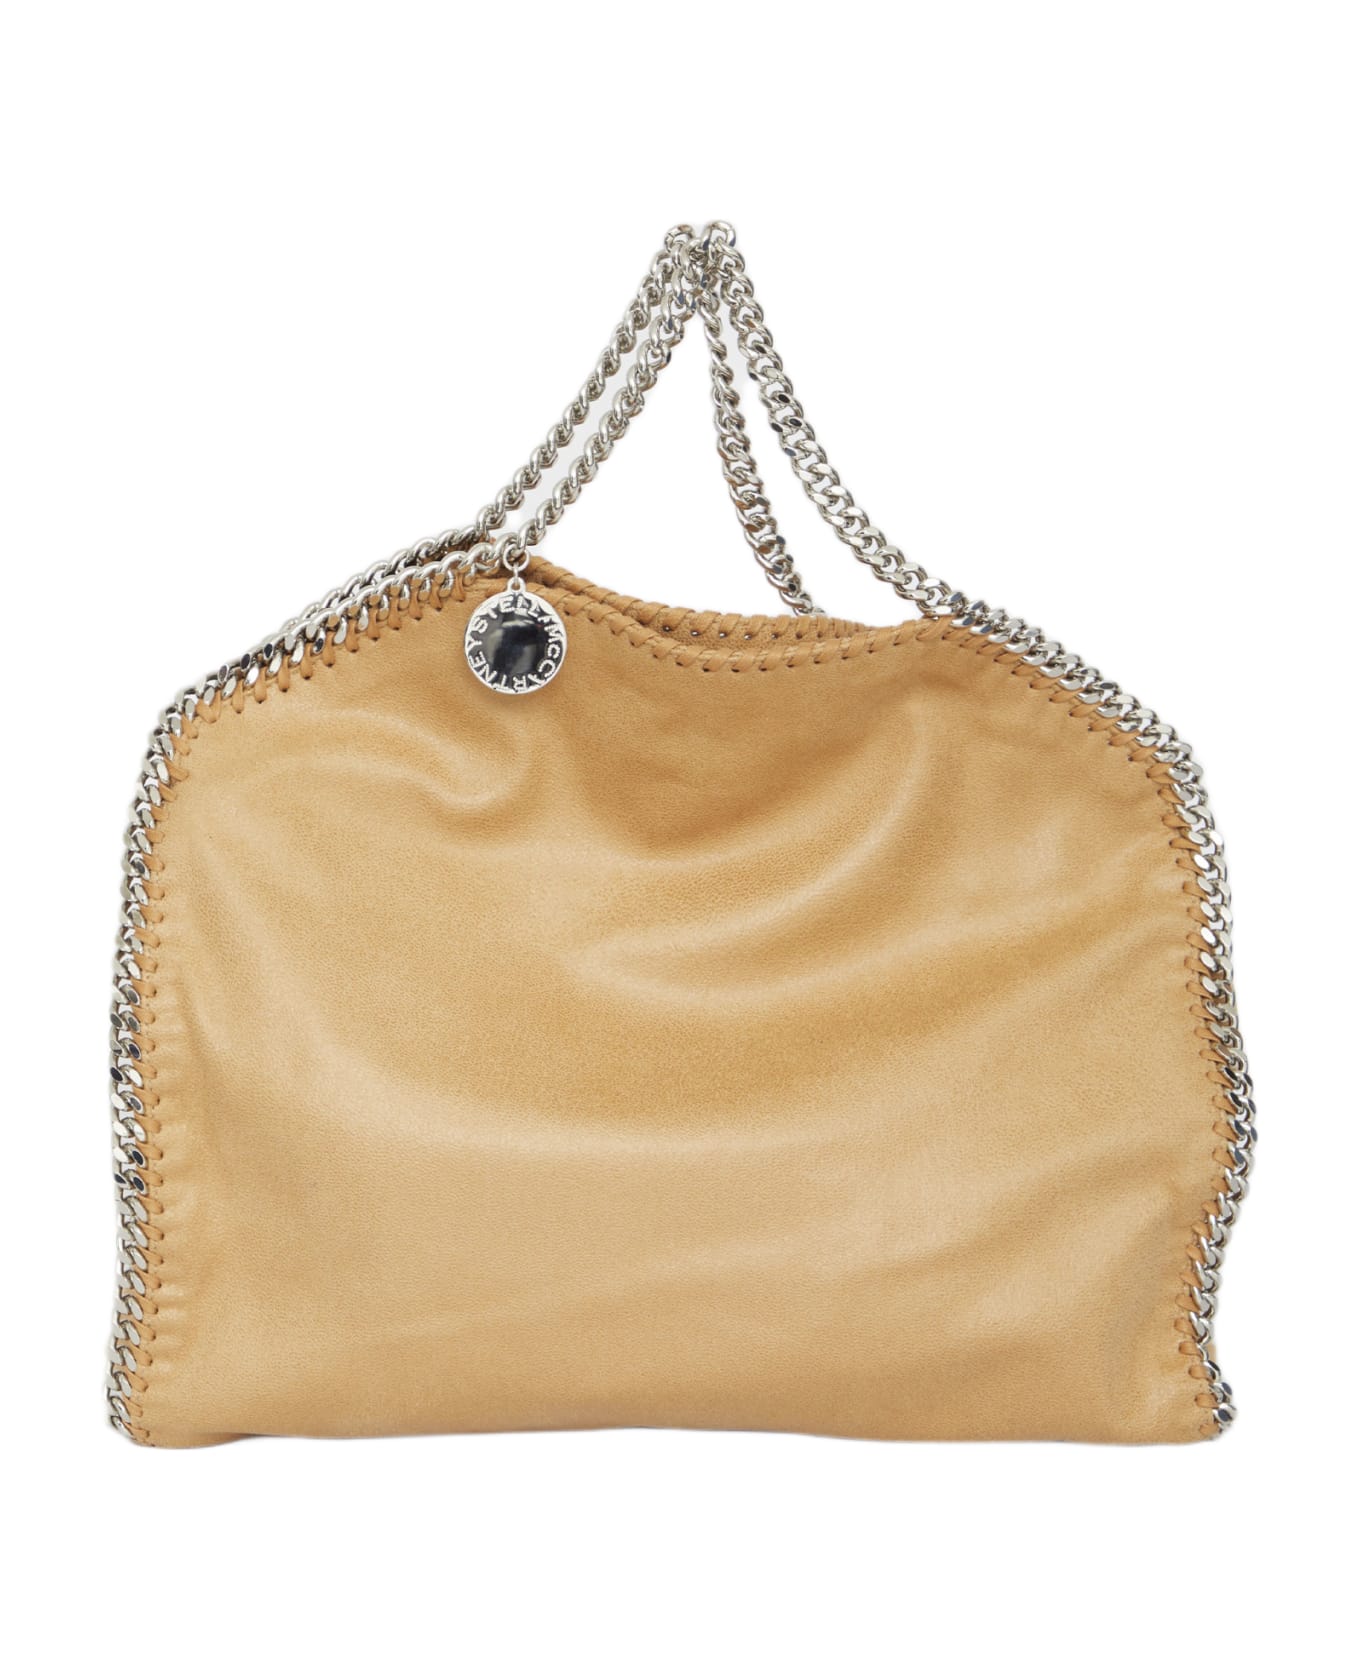 Stella McCartney Falabella Fold Over Handbag - Fawn